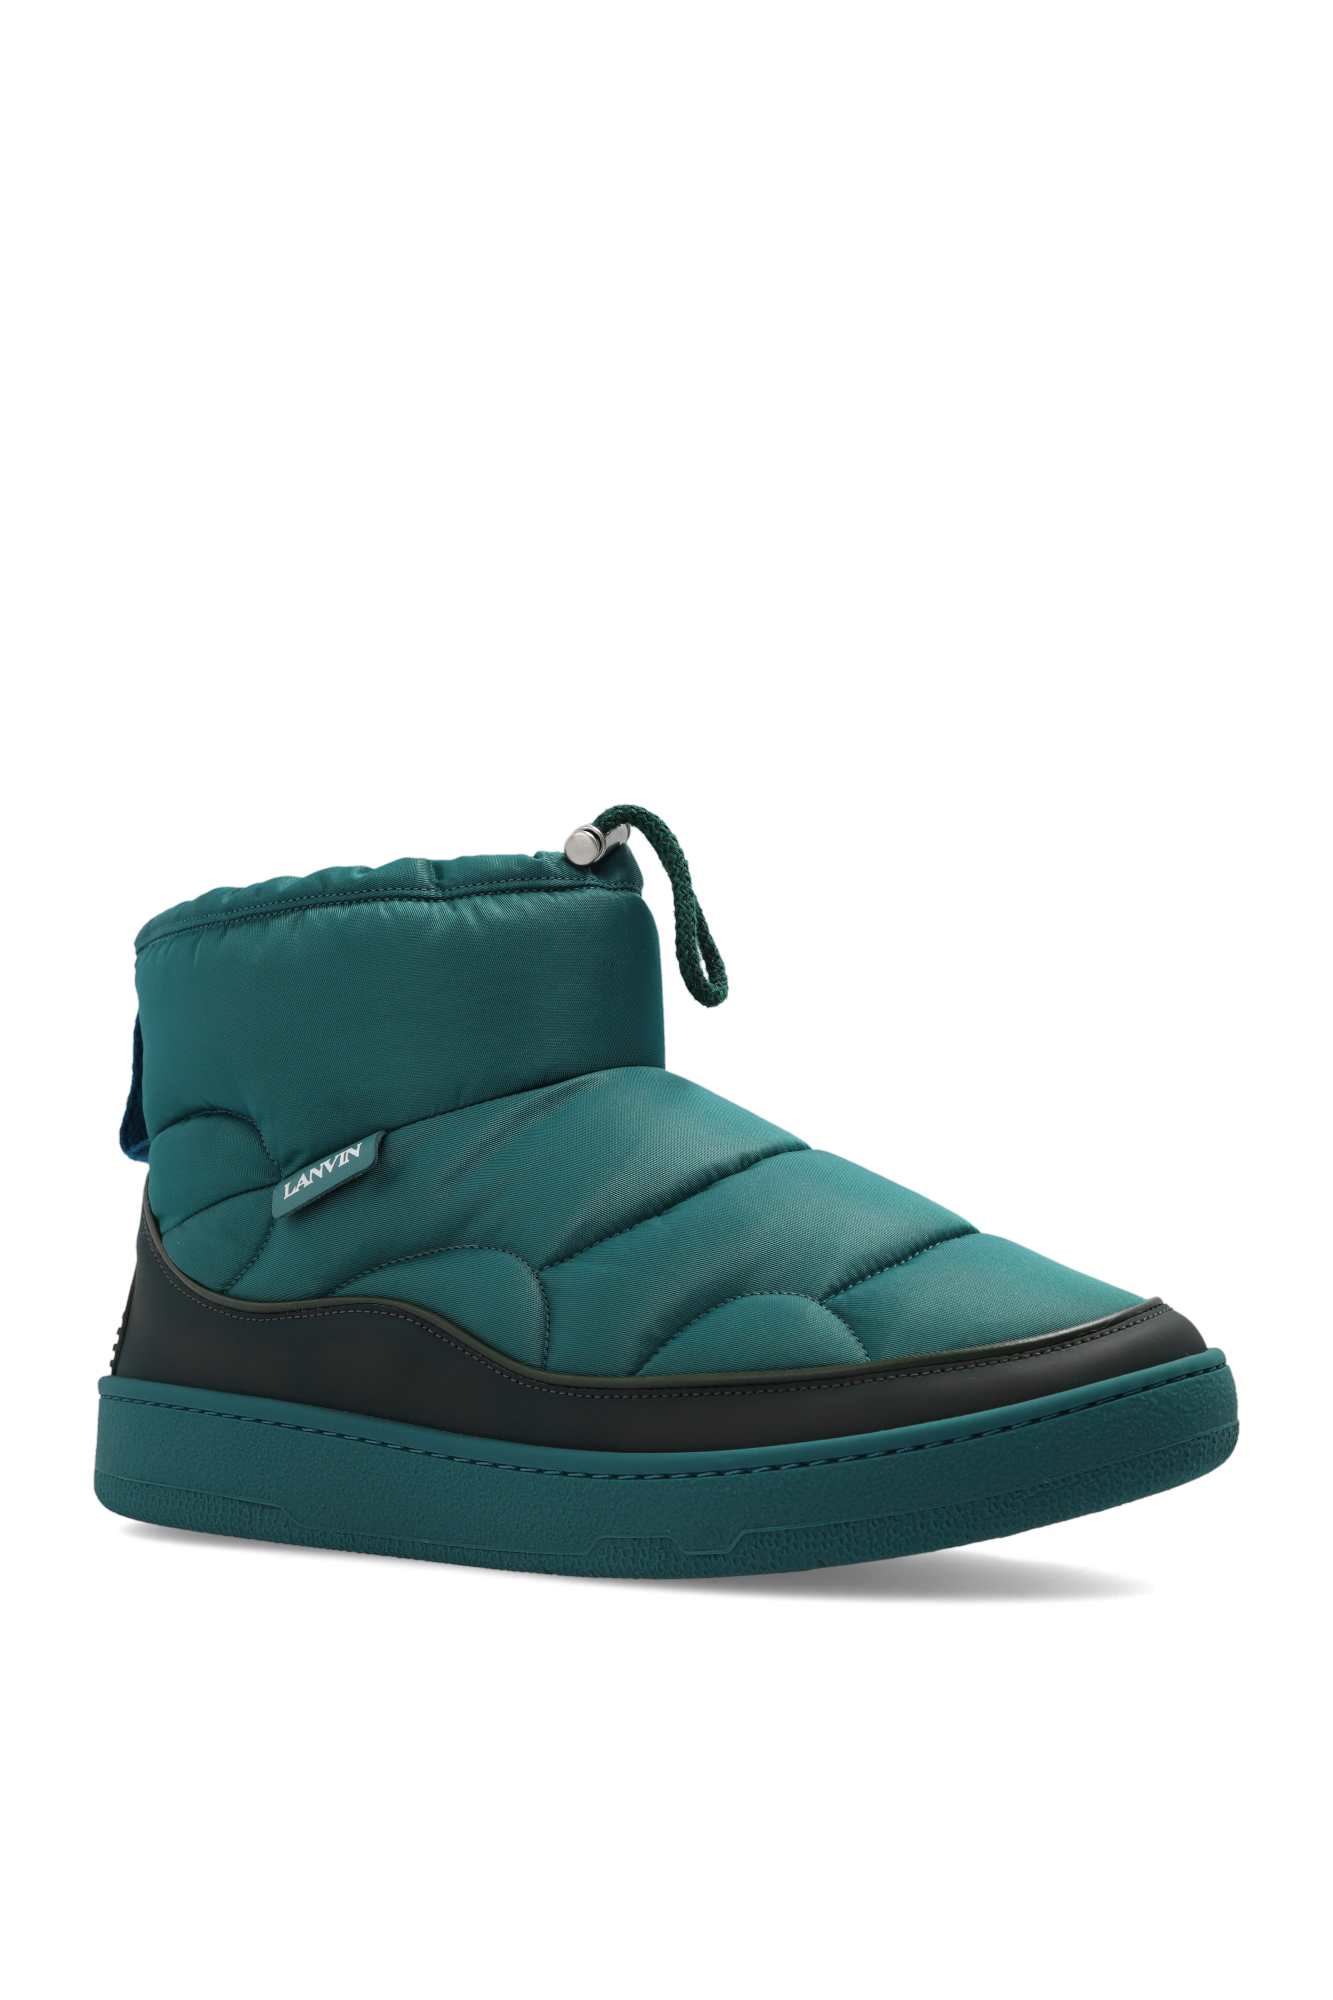 Lanvin ‘Curb Snow’ snow boots